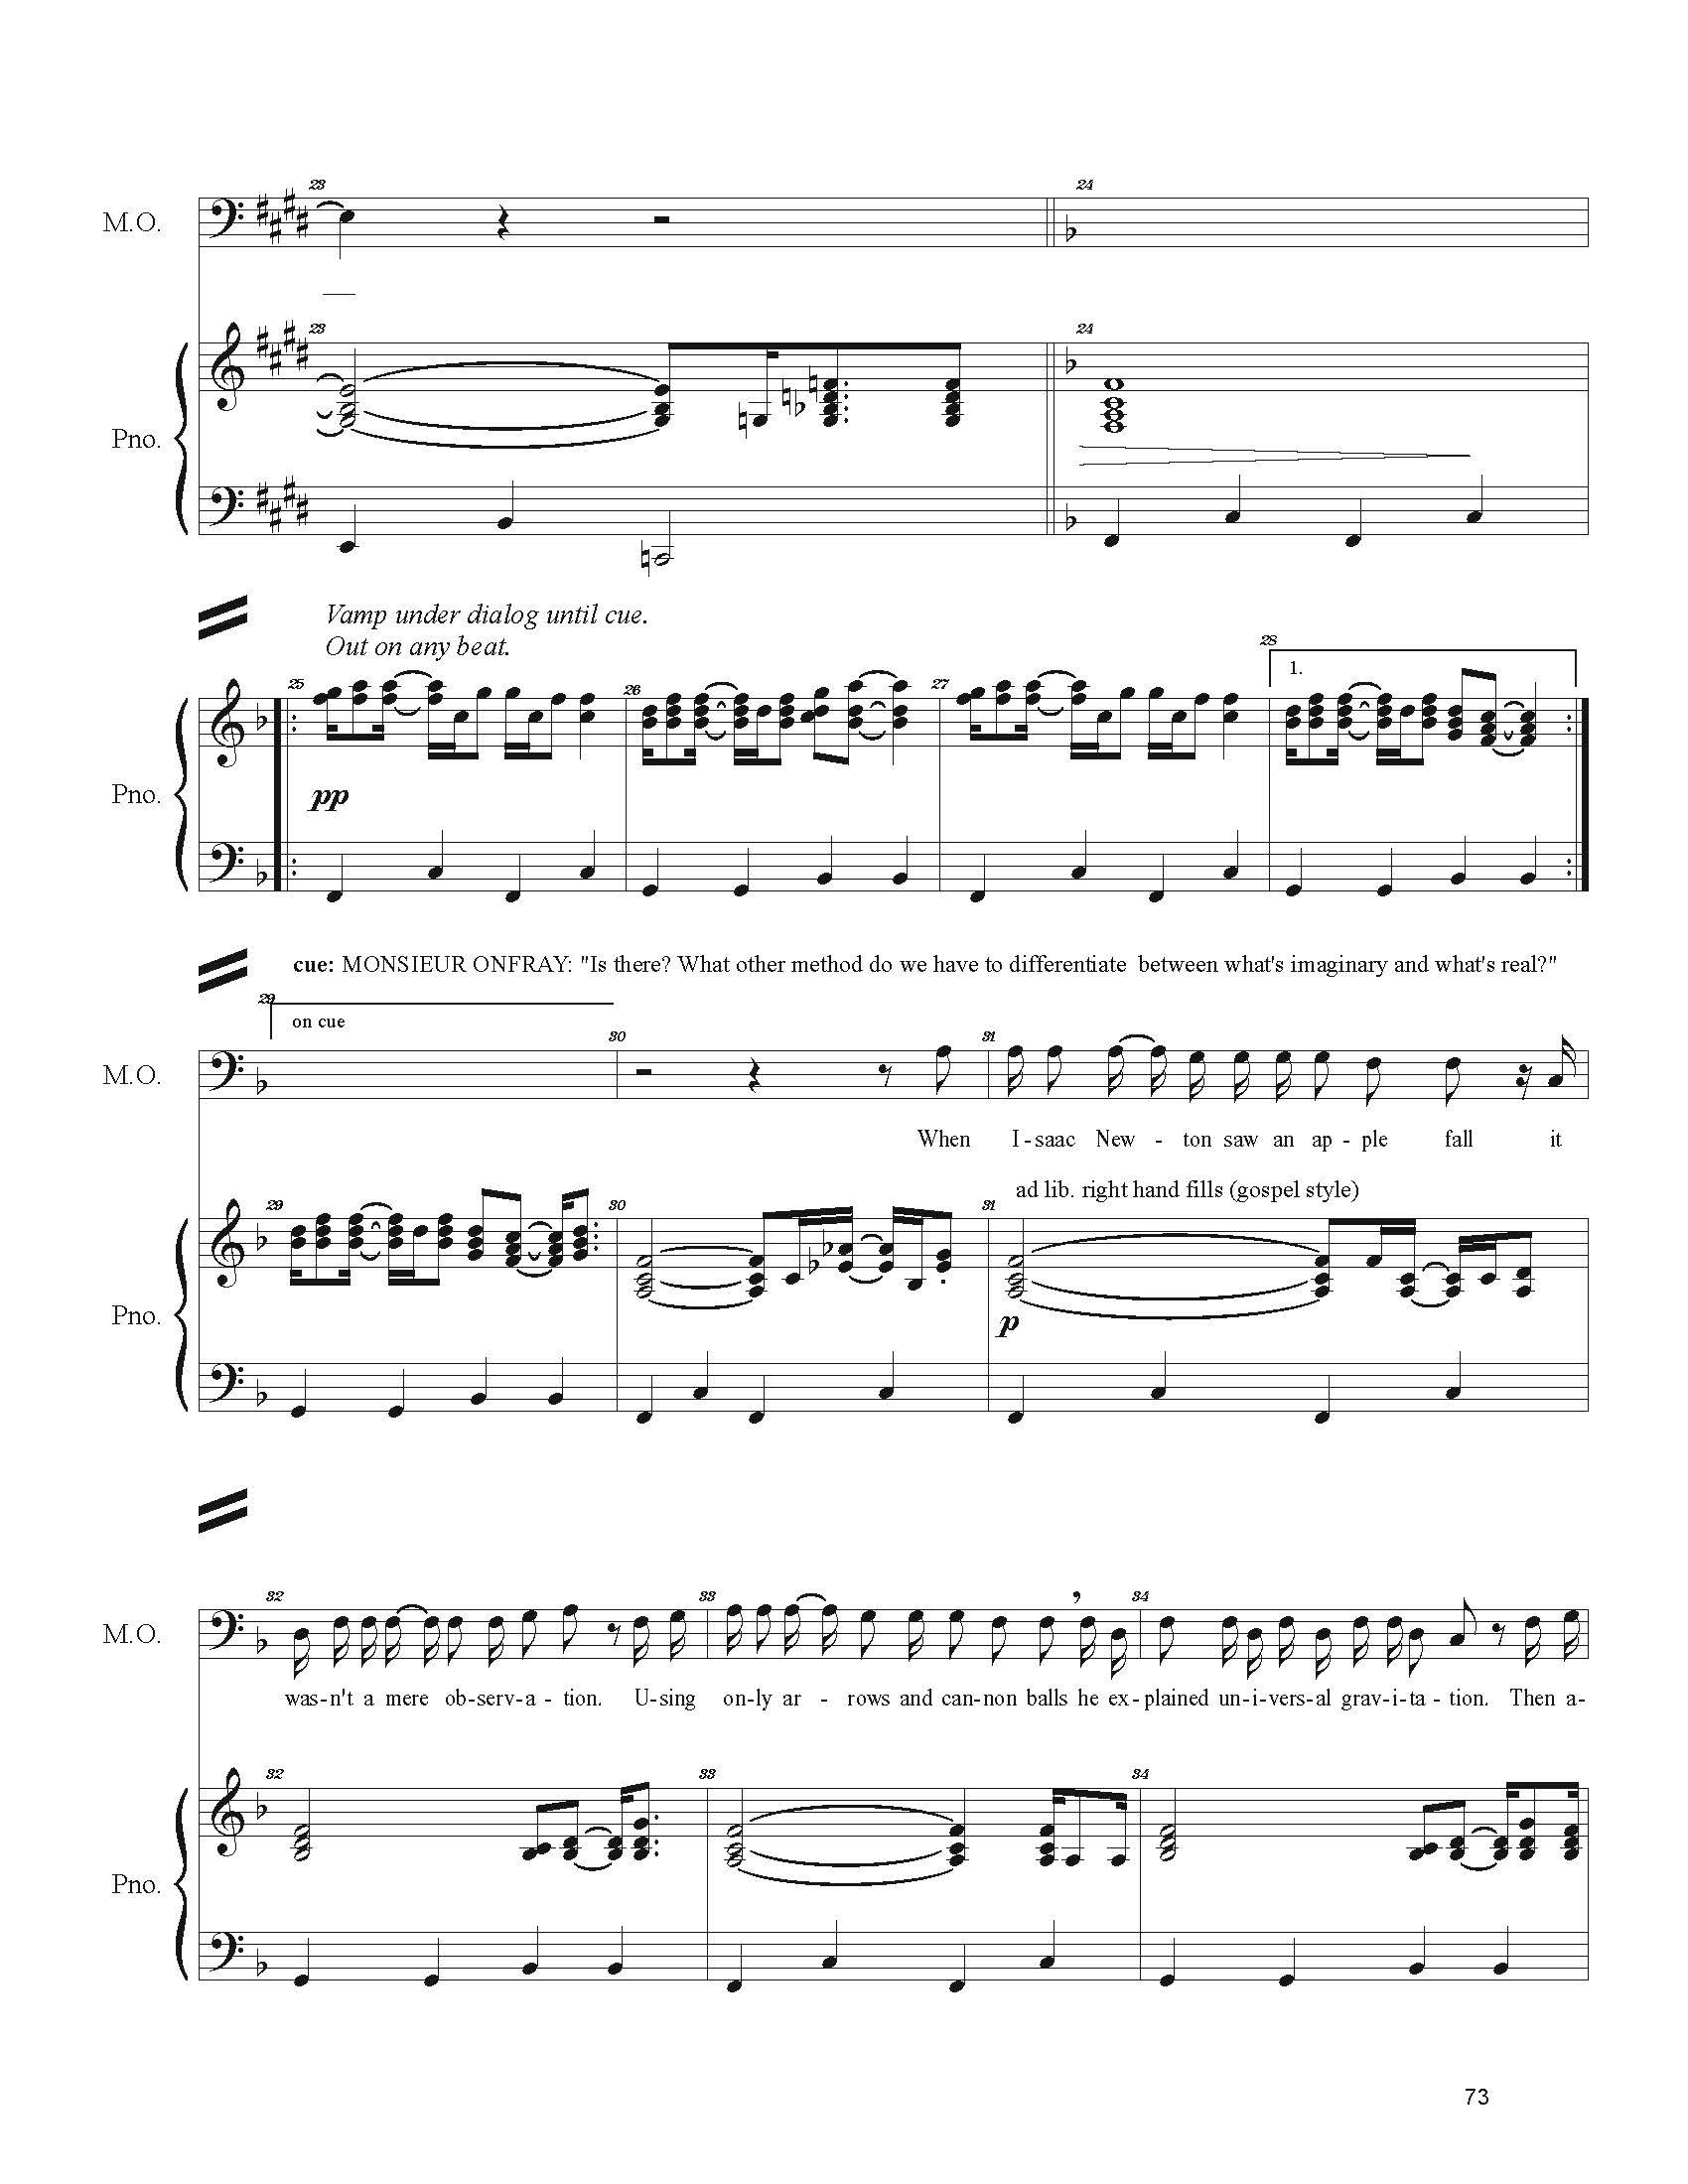 FULL PIANO VOCAL SCORE DRAFT 1 - Score_Page_073.jpg